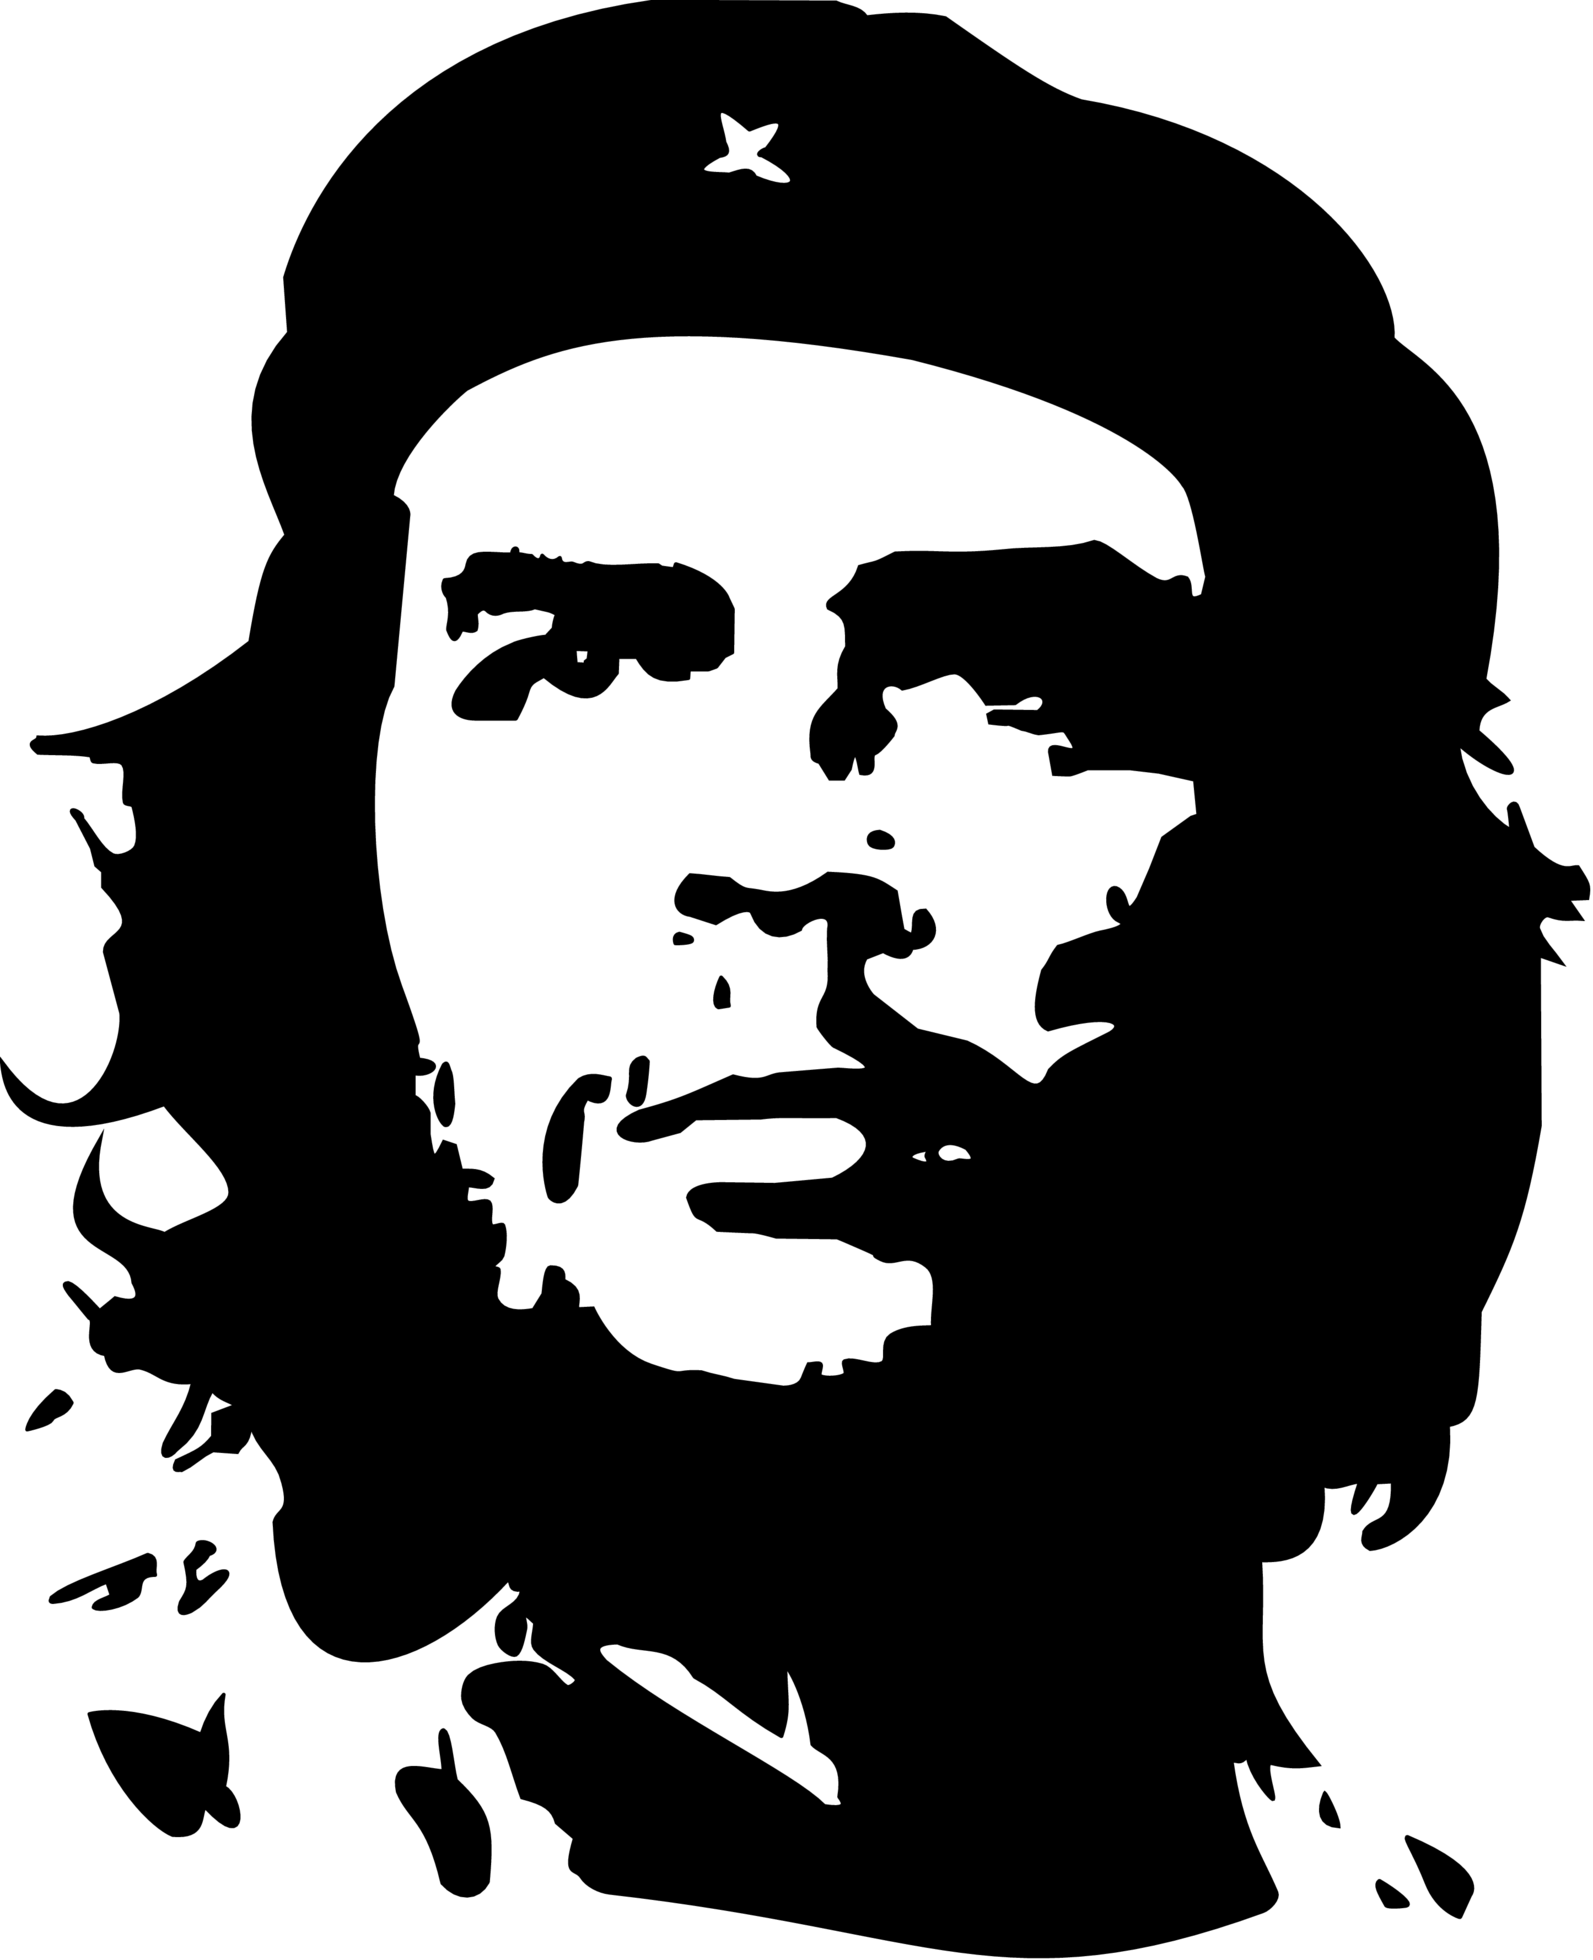 Free Download Colorful Wallpapers, 28 Che Guevara Full - Che Guevara Images Png - HD Wallpaper 